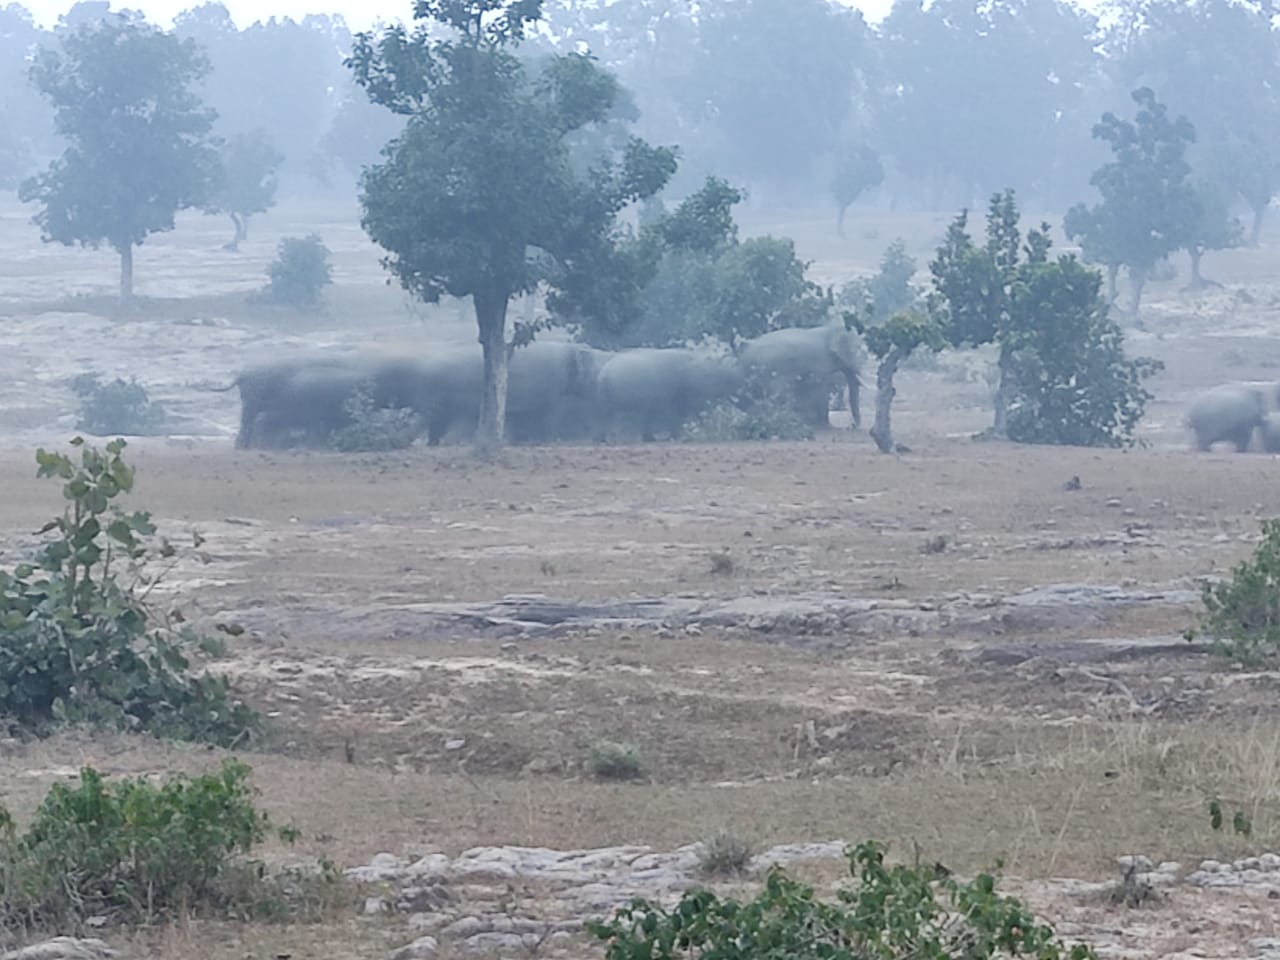 A team of 42 elephants left for Chhattisgarh after spending 54 days in